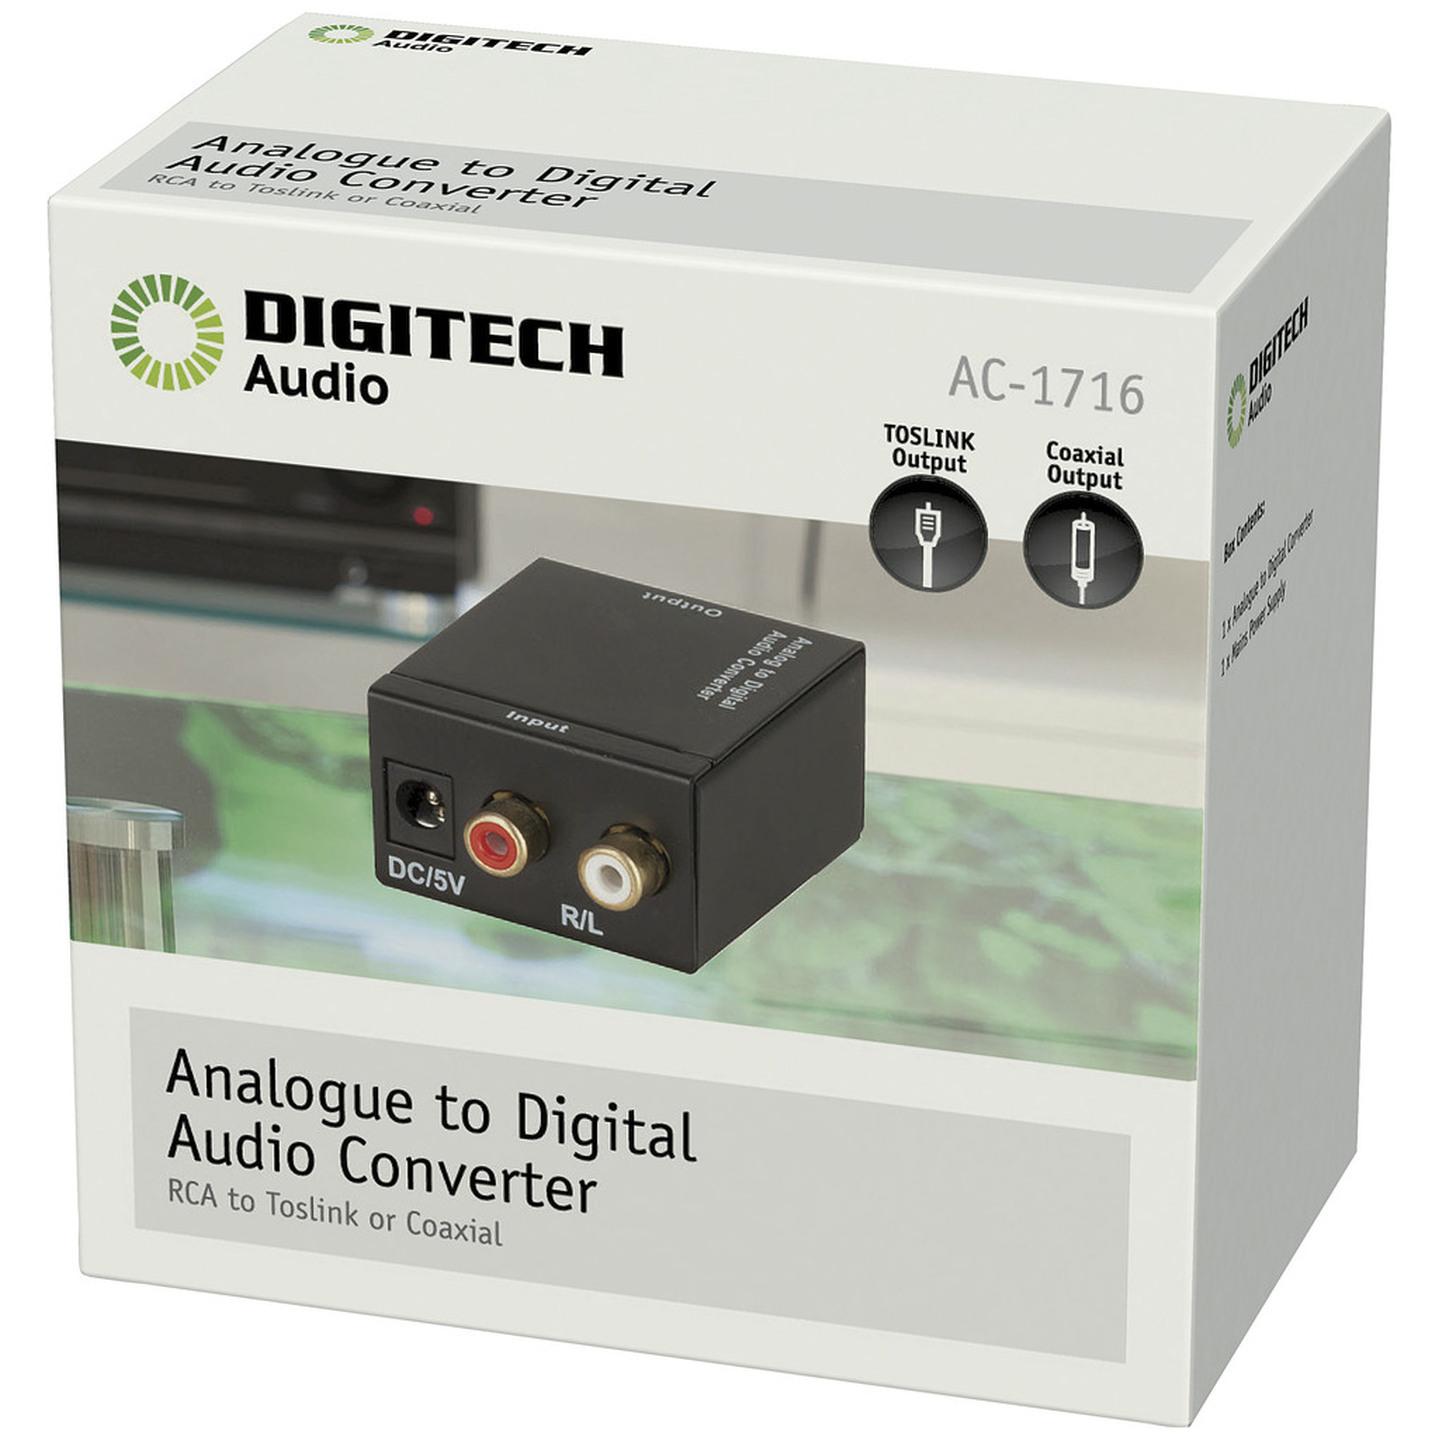 Digitech Analogue to Digital Audio Converter